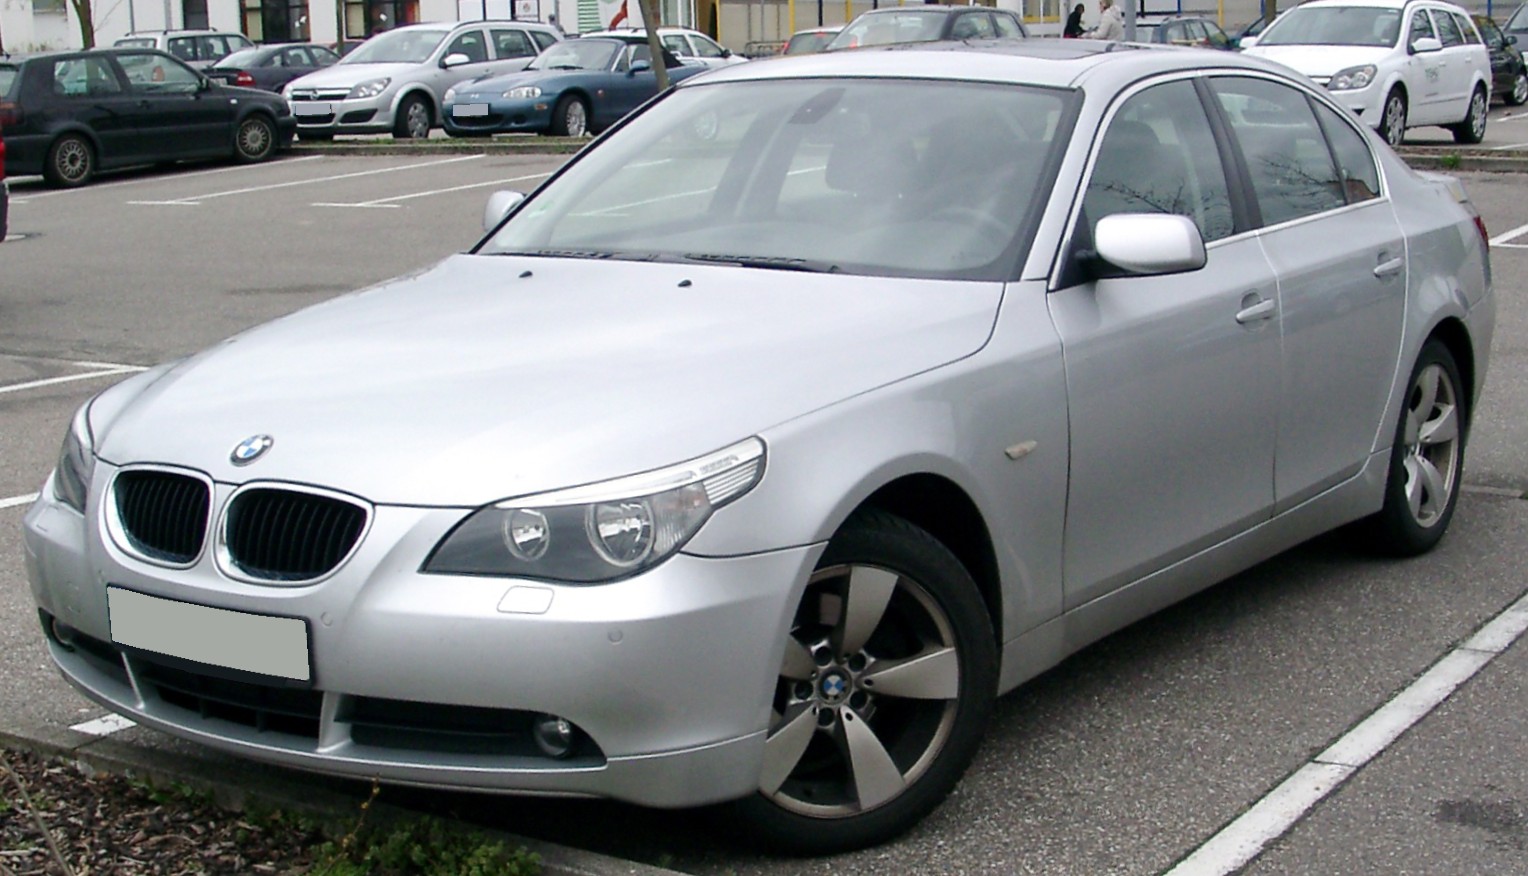 File:BMW E60 front 20080417.jpg